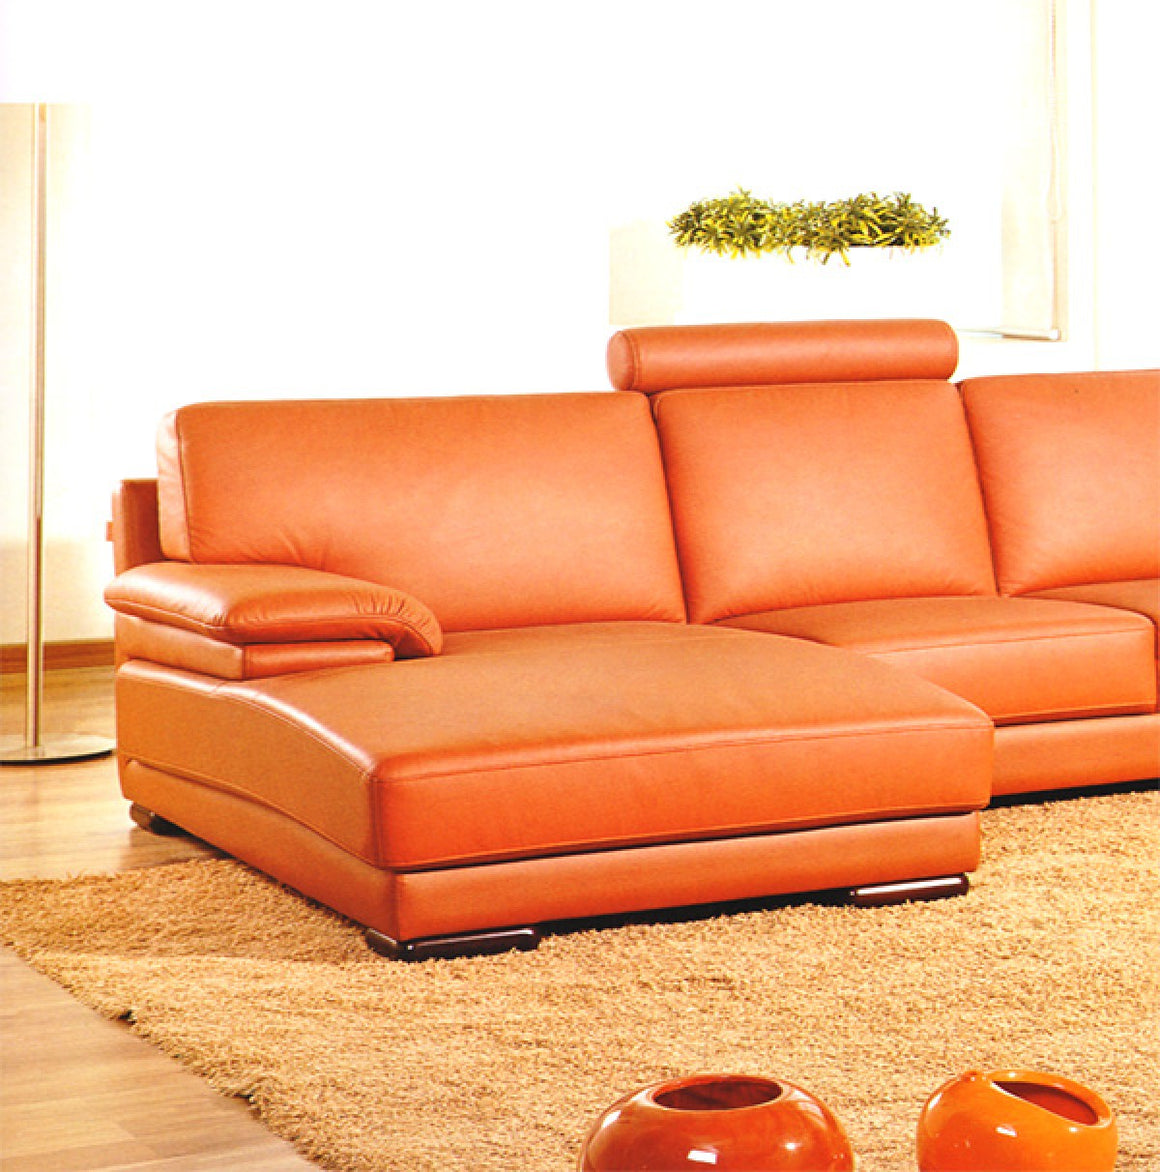 Divani Casa 2227 - Modern Leather Sectional Sofa